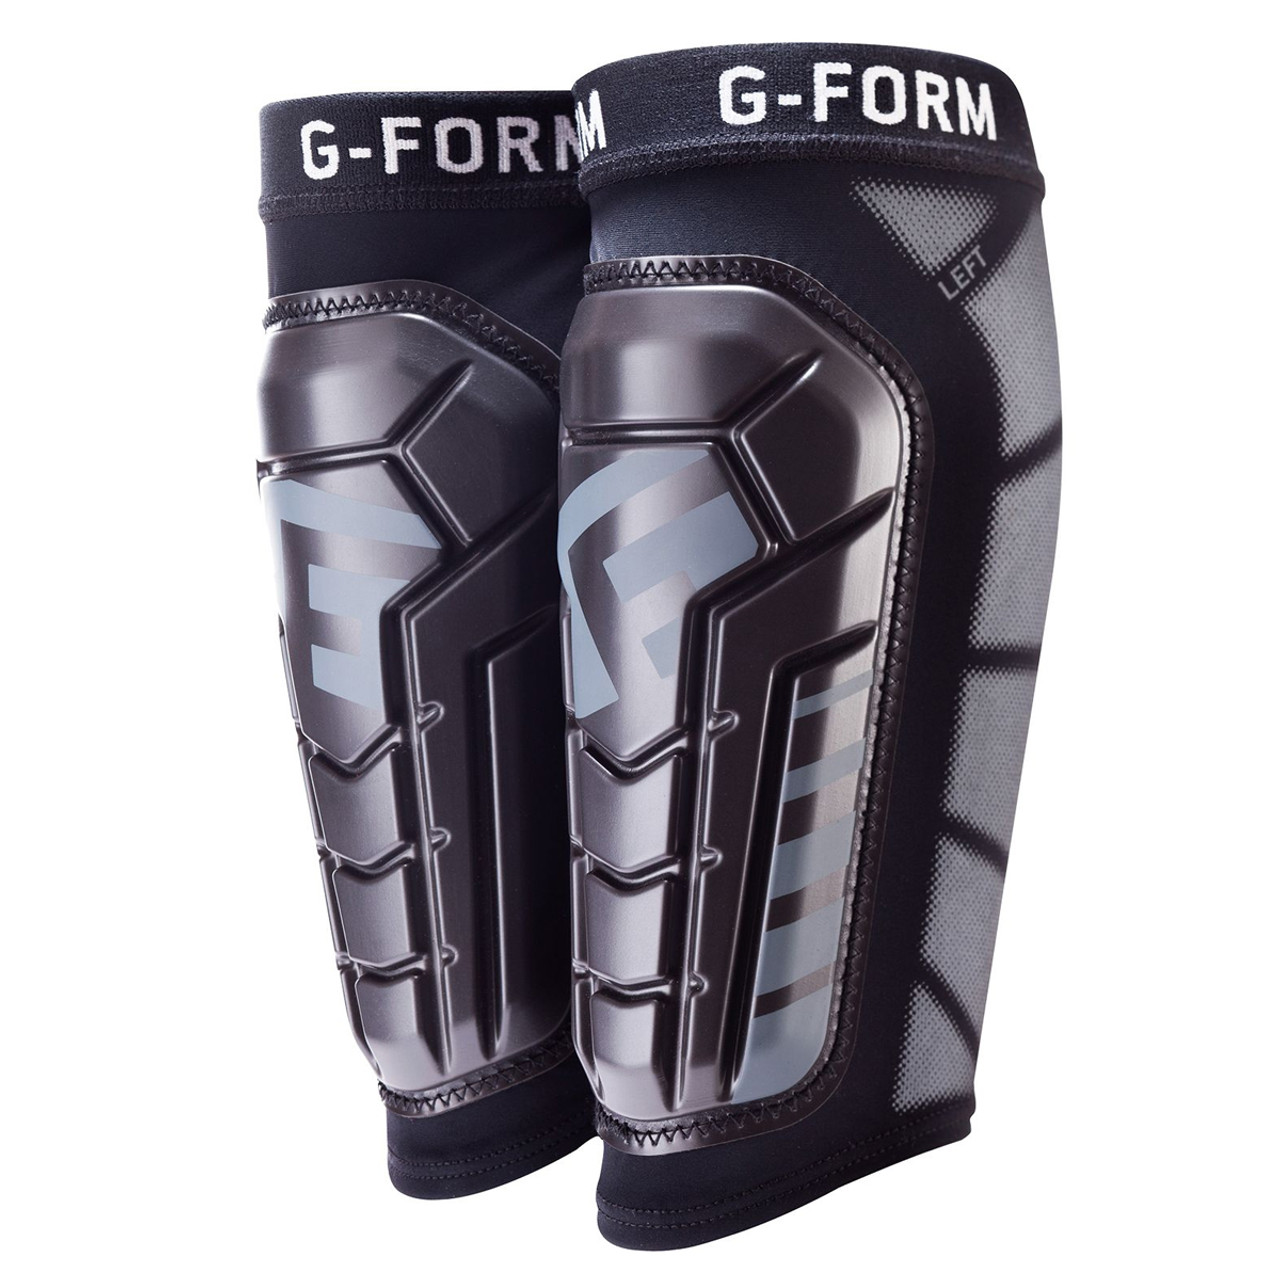 Review: G-Form Pro-S Shin Guards - FOOTBALL FASHION